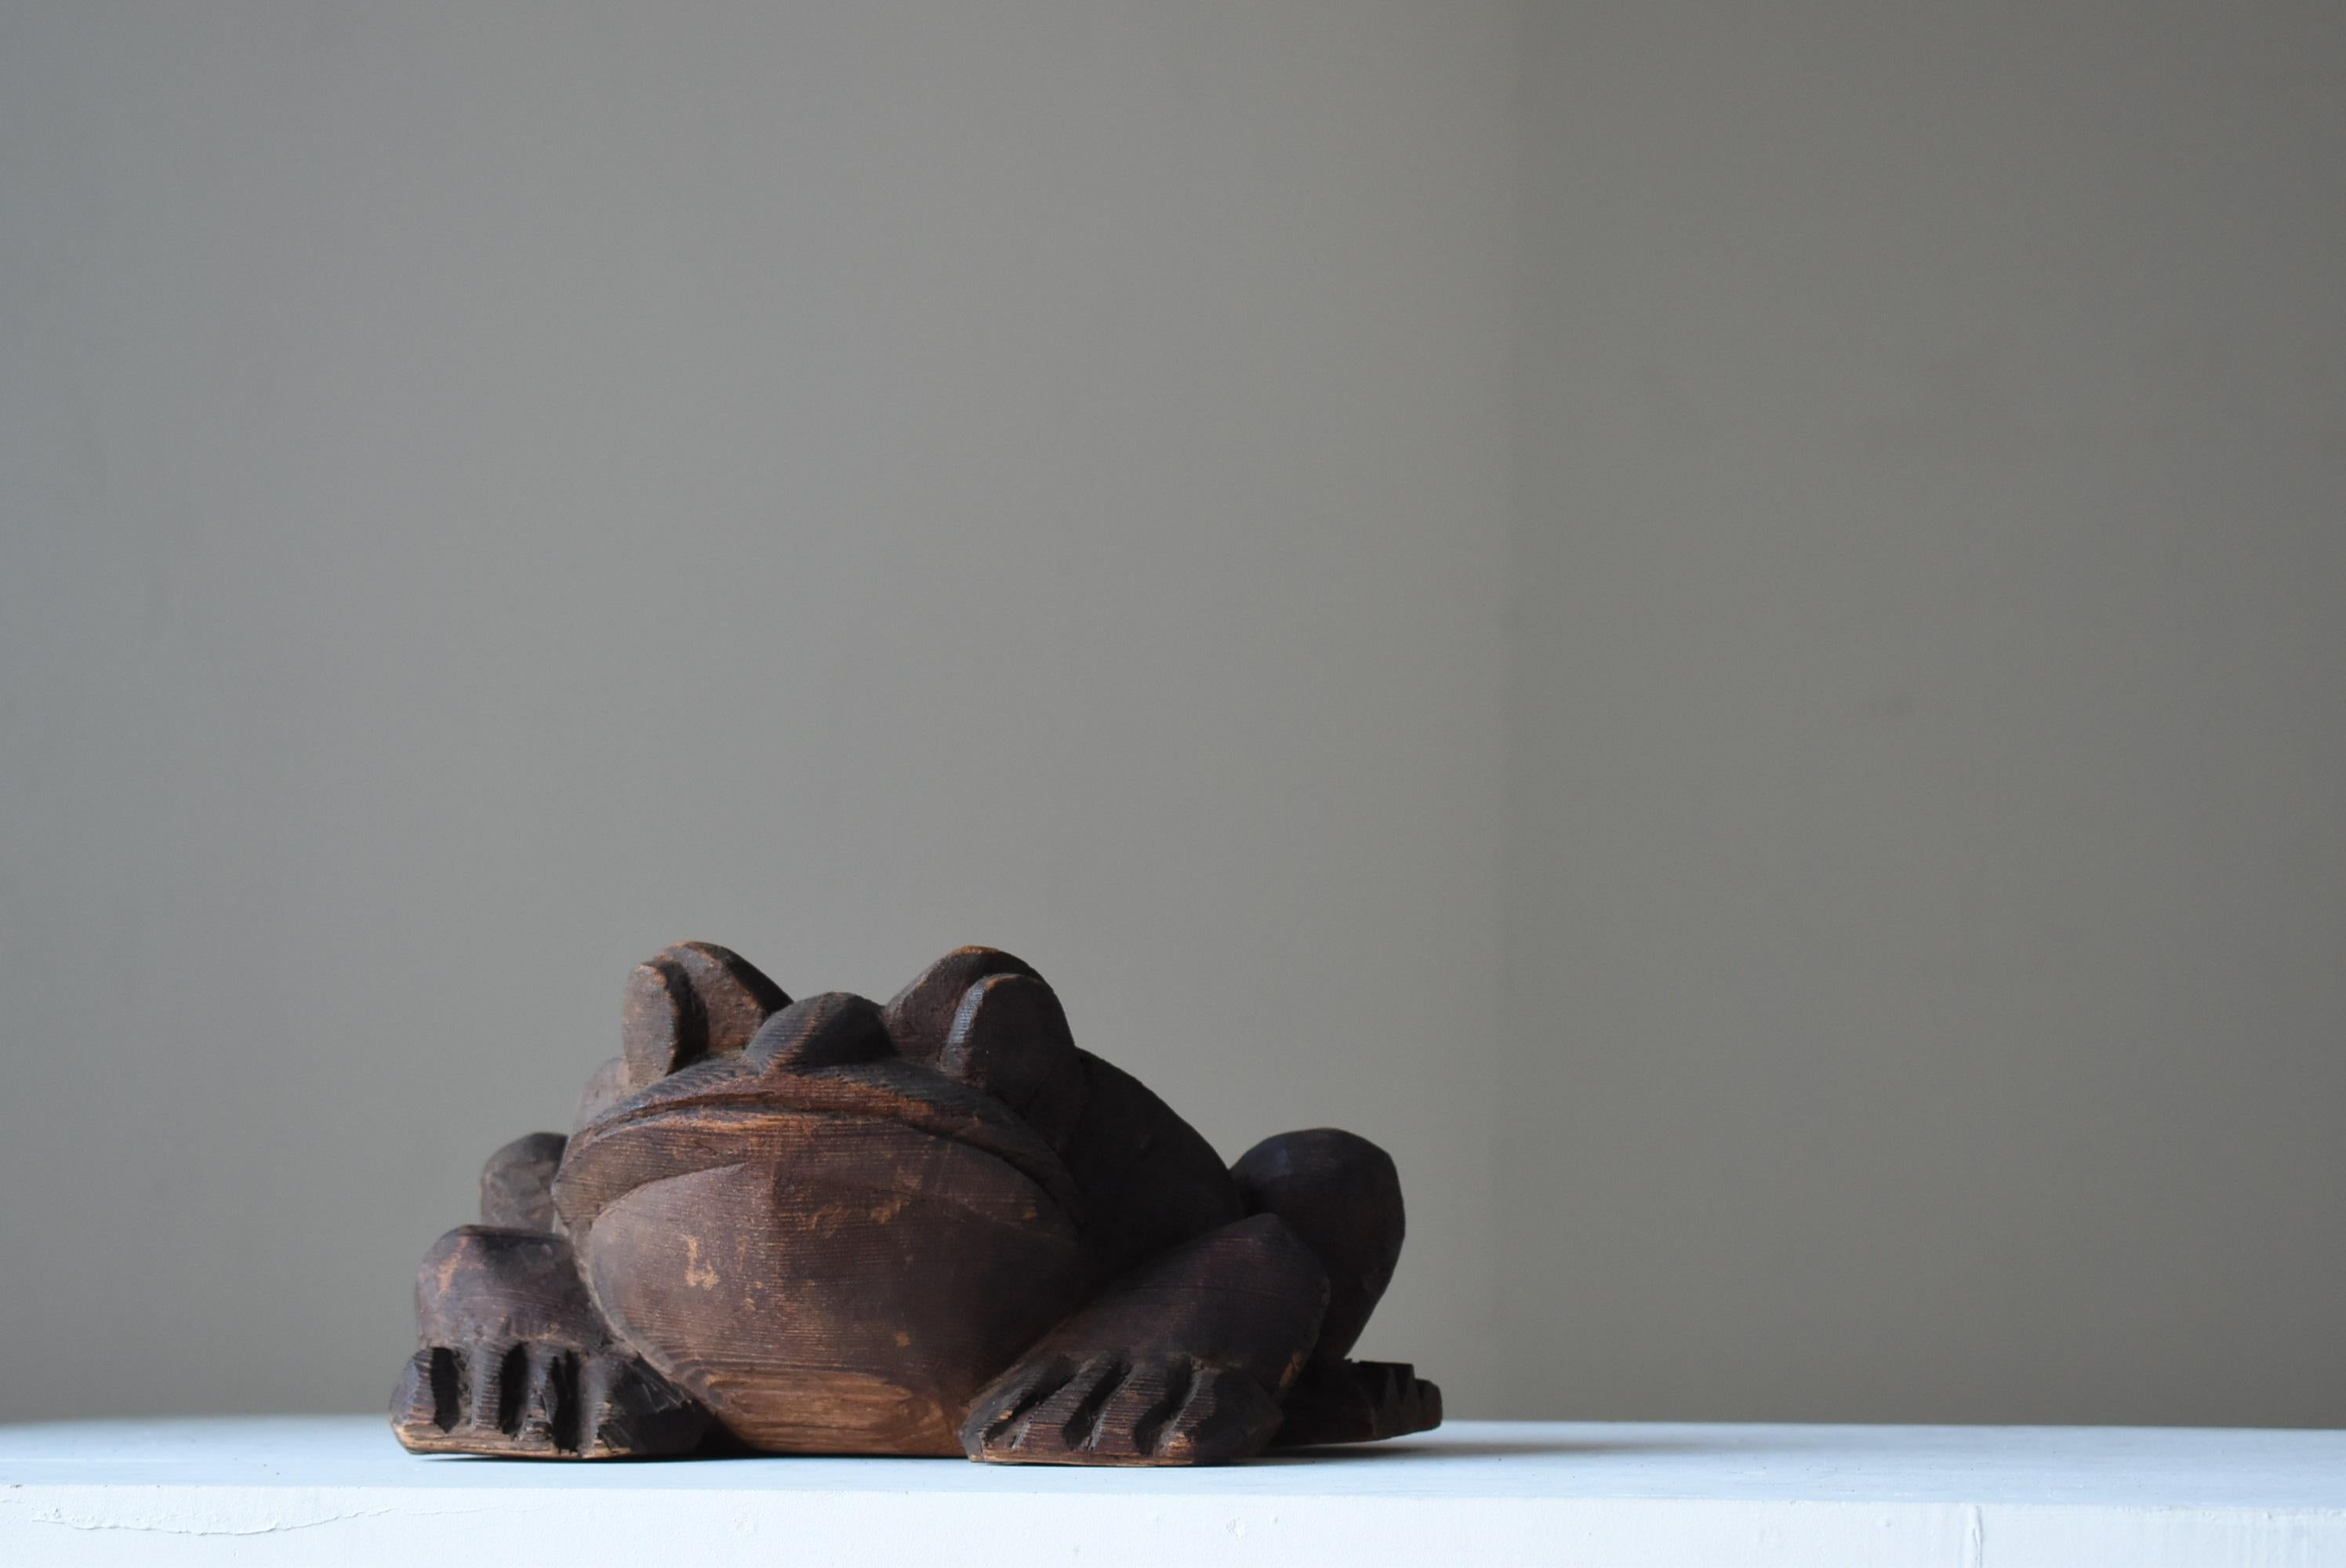 Japanese Antique Wood Carving Frog 1900s-1930s/Folk Art Mingei Wabisabi Object 6